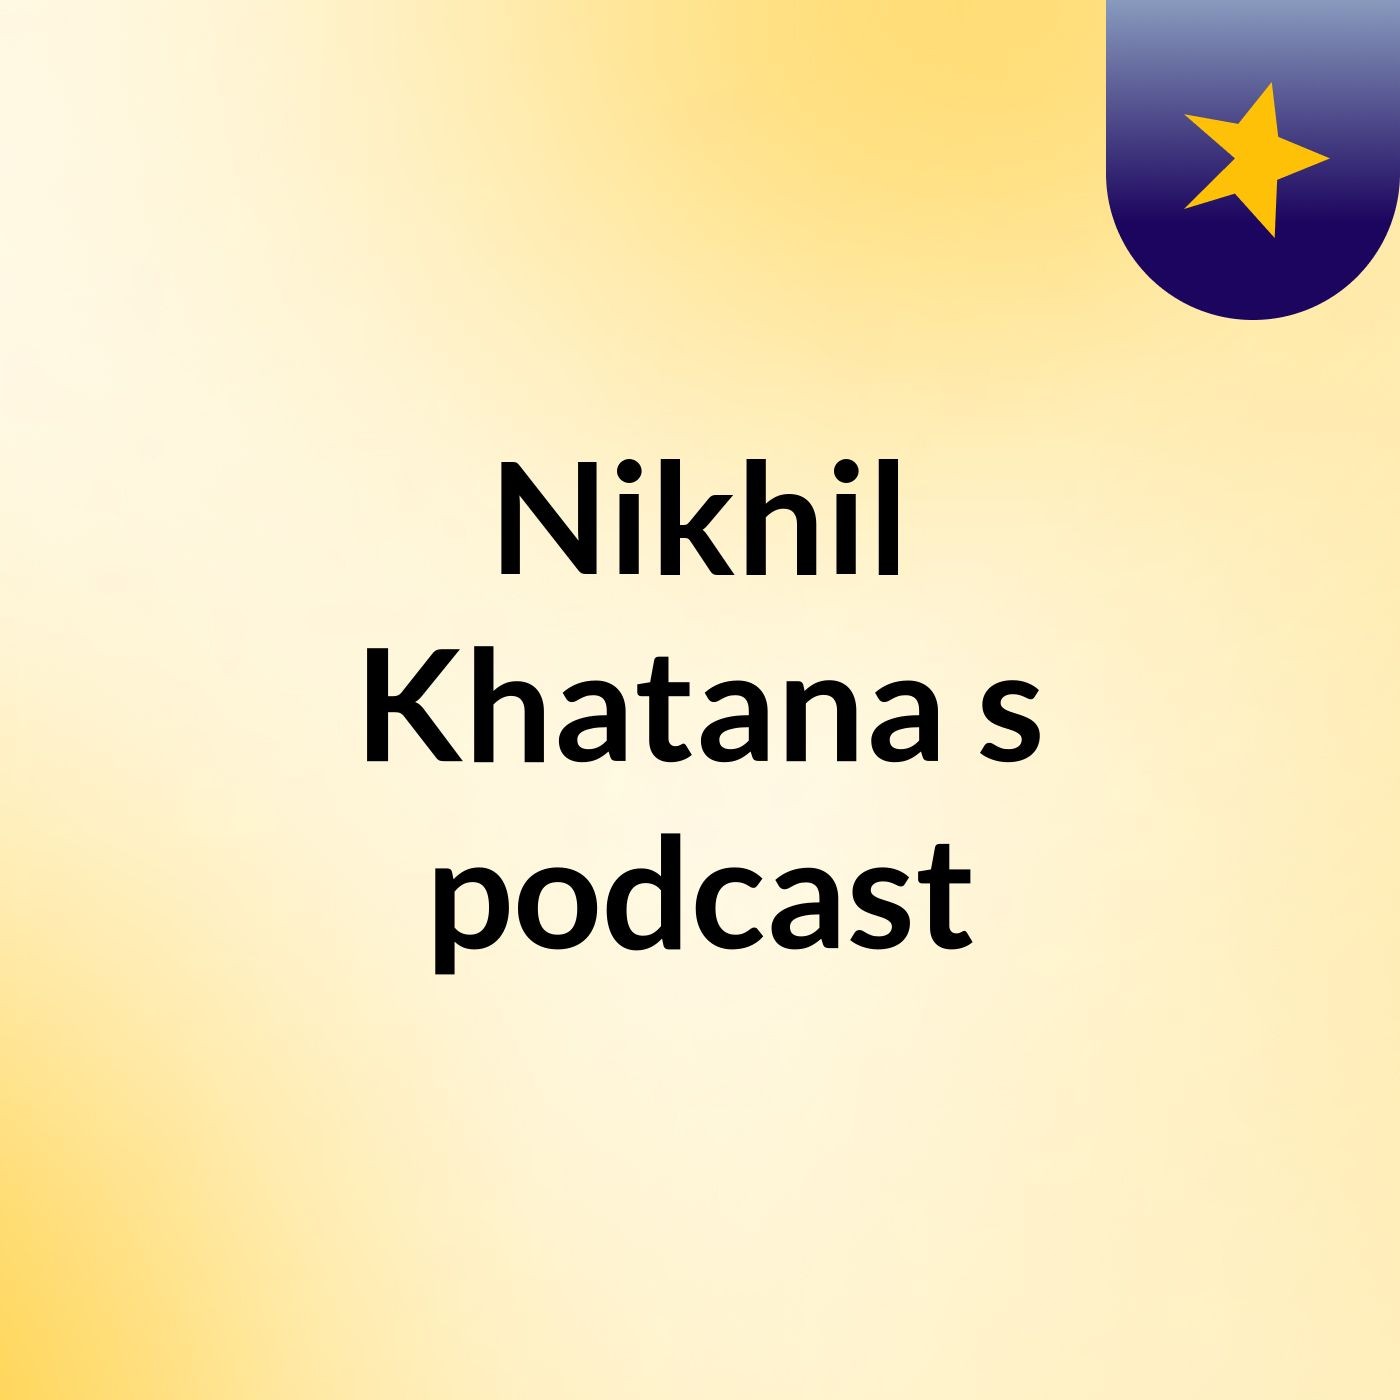 Nikhil Khatana's podcast